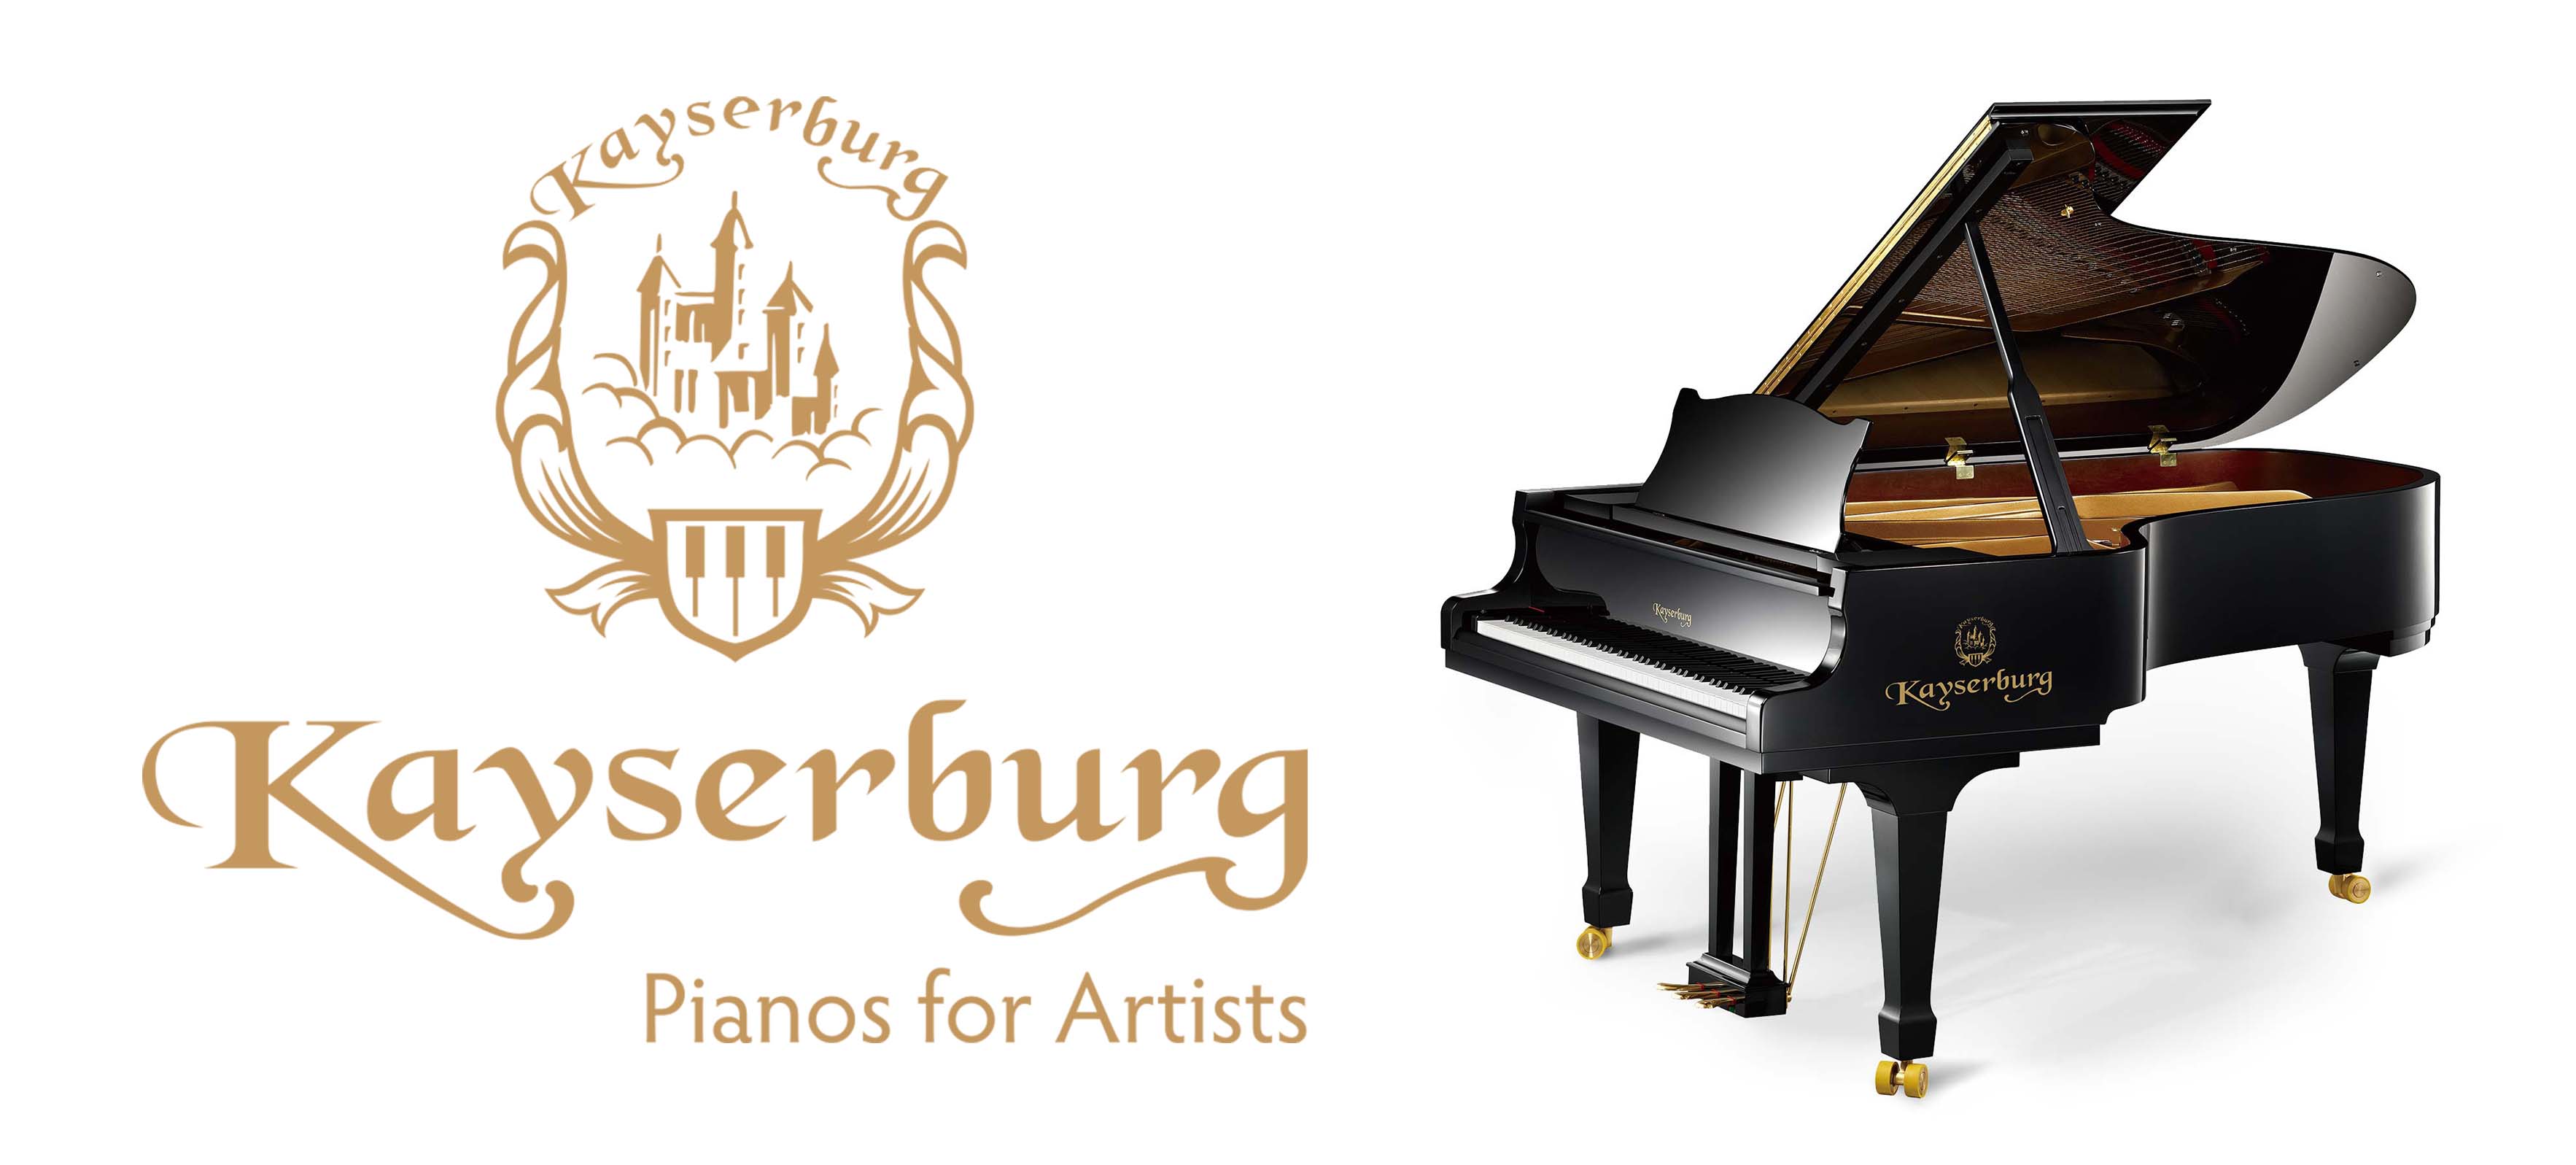 Kayserburg Pianos